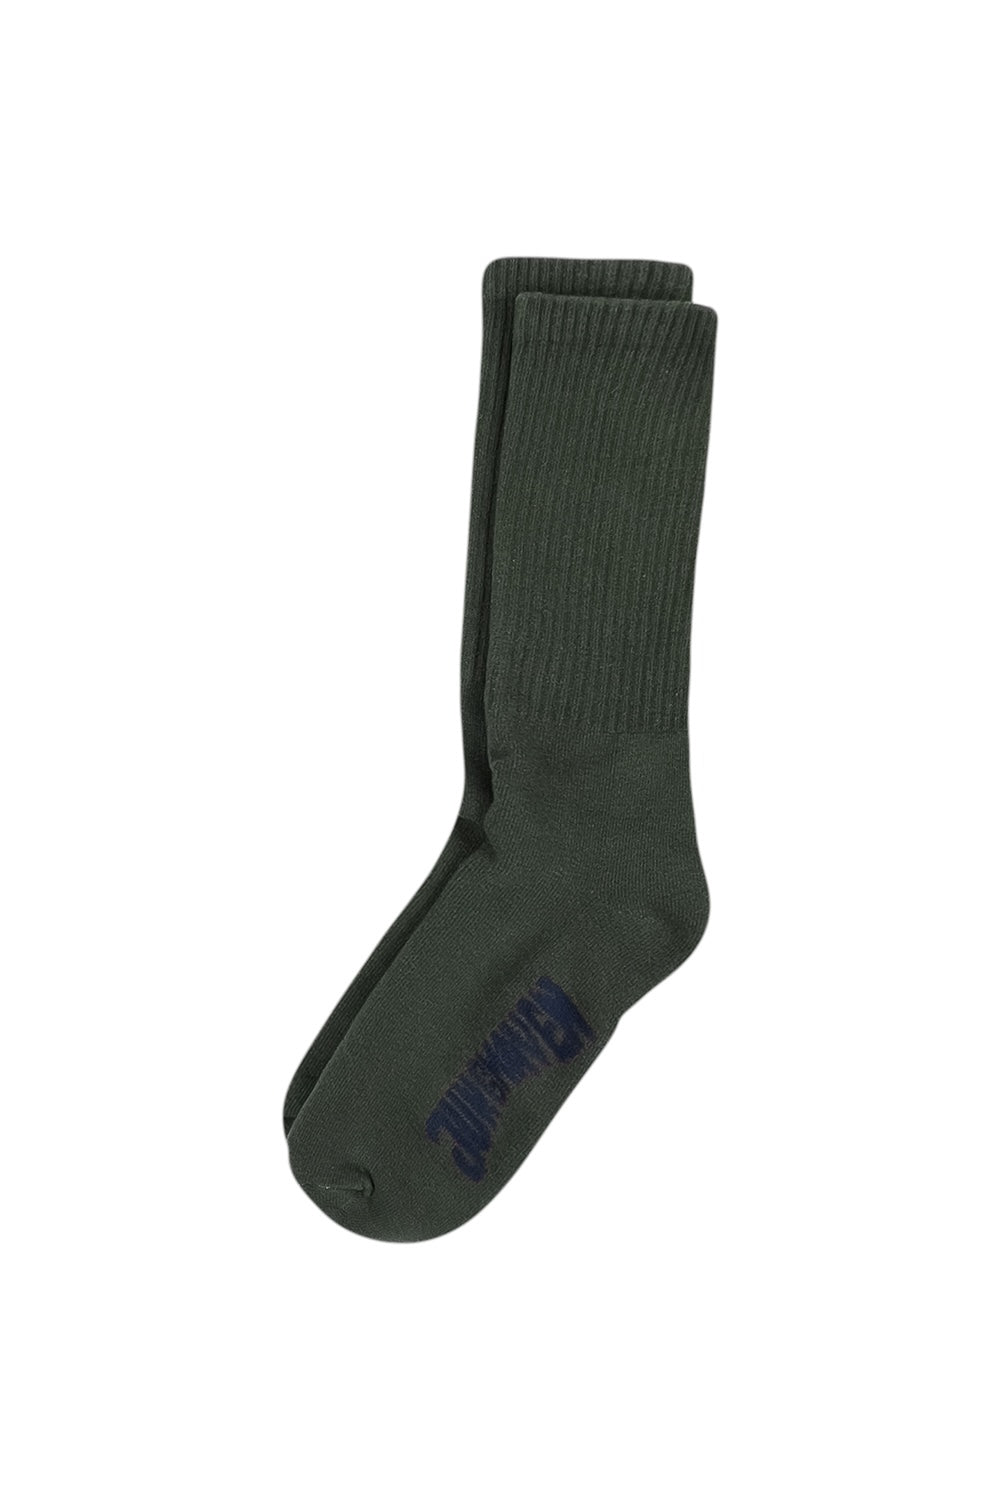 Hemp Wool Crew Socks | Jungmaven Hemp Clothing & Accessories / Color: Olive Green